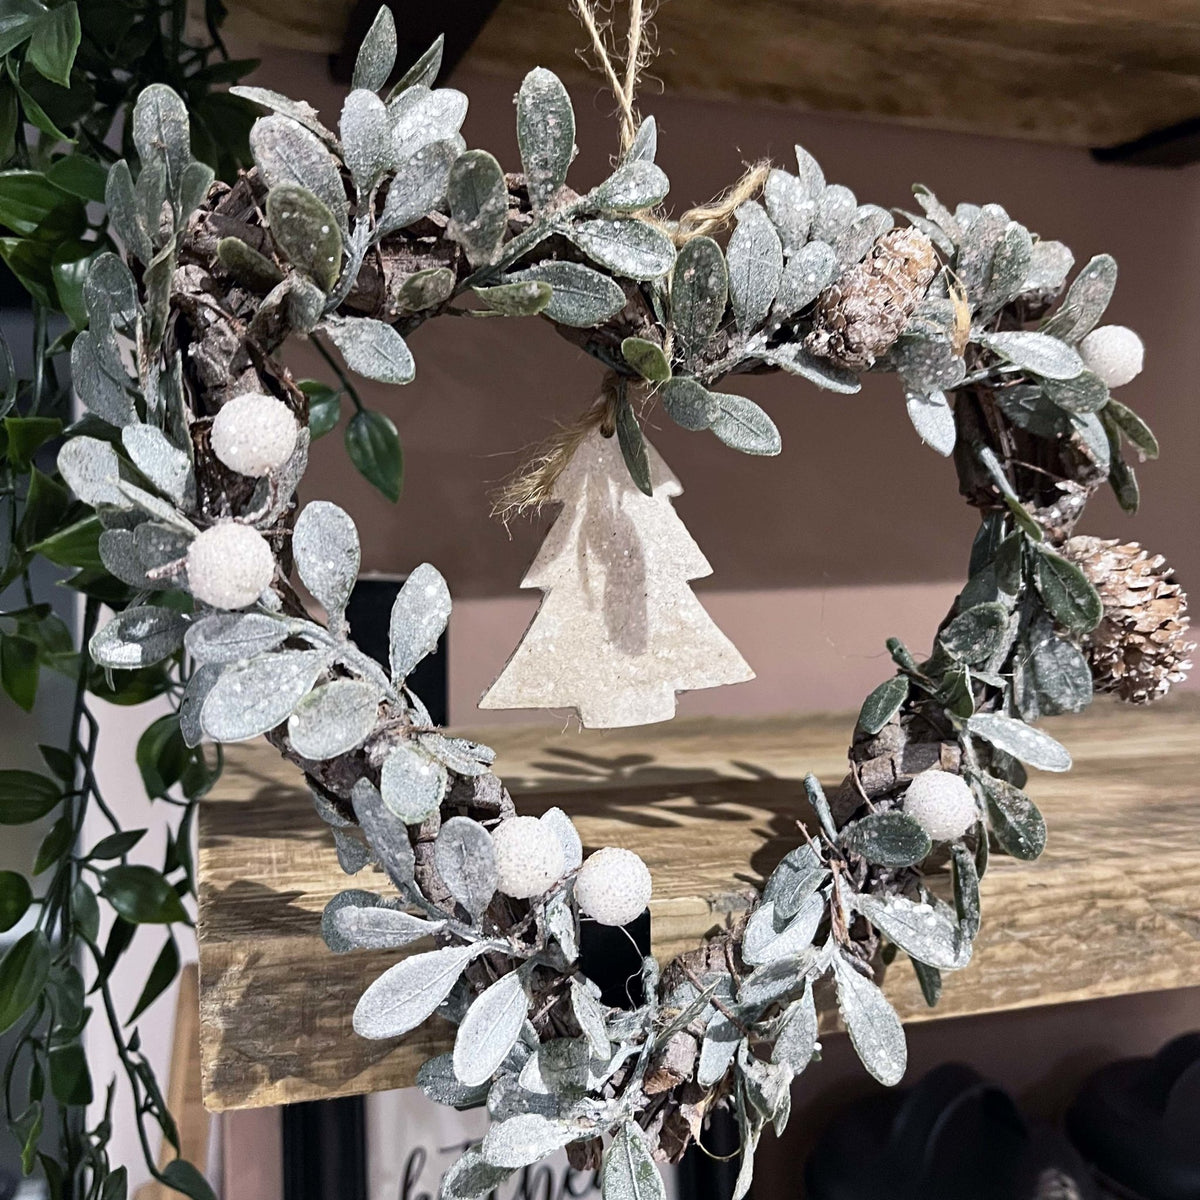 Small Heart-shaped Christmas Tree Wreath hung on wooden shelf